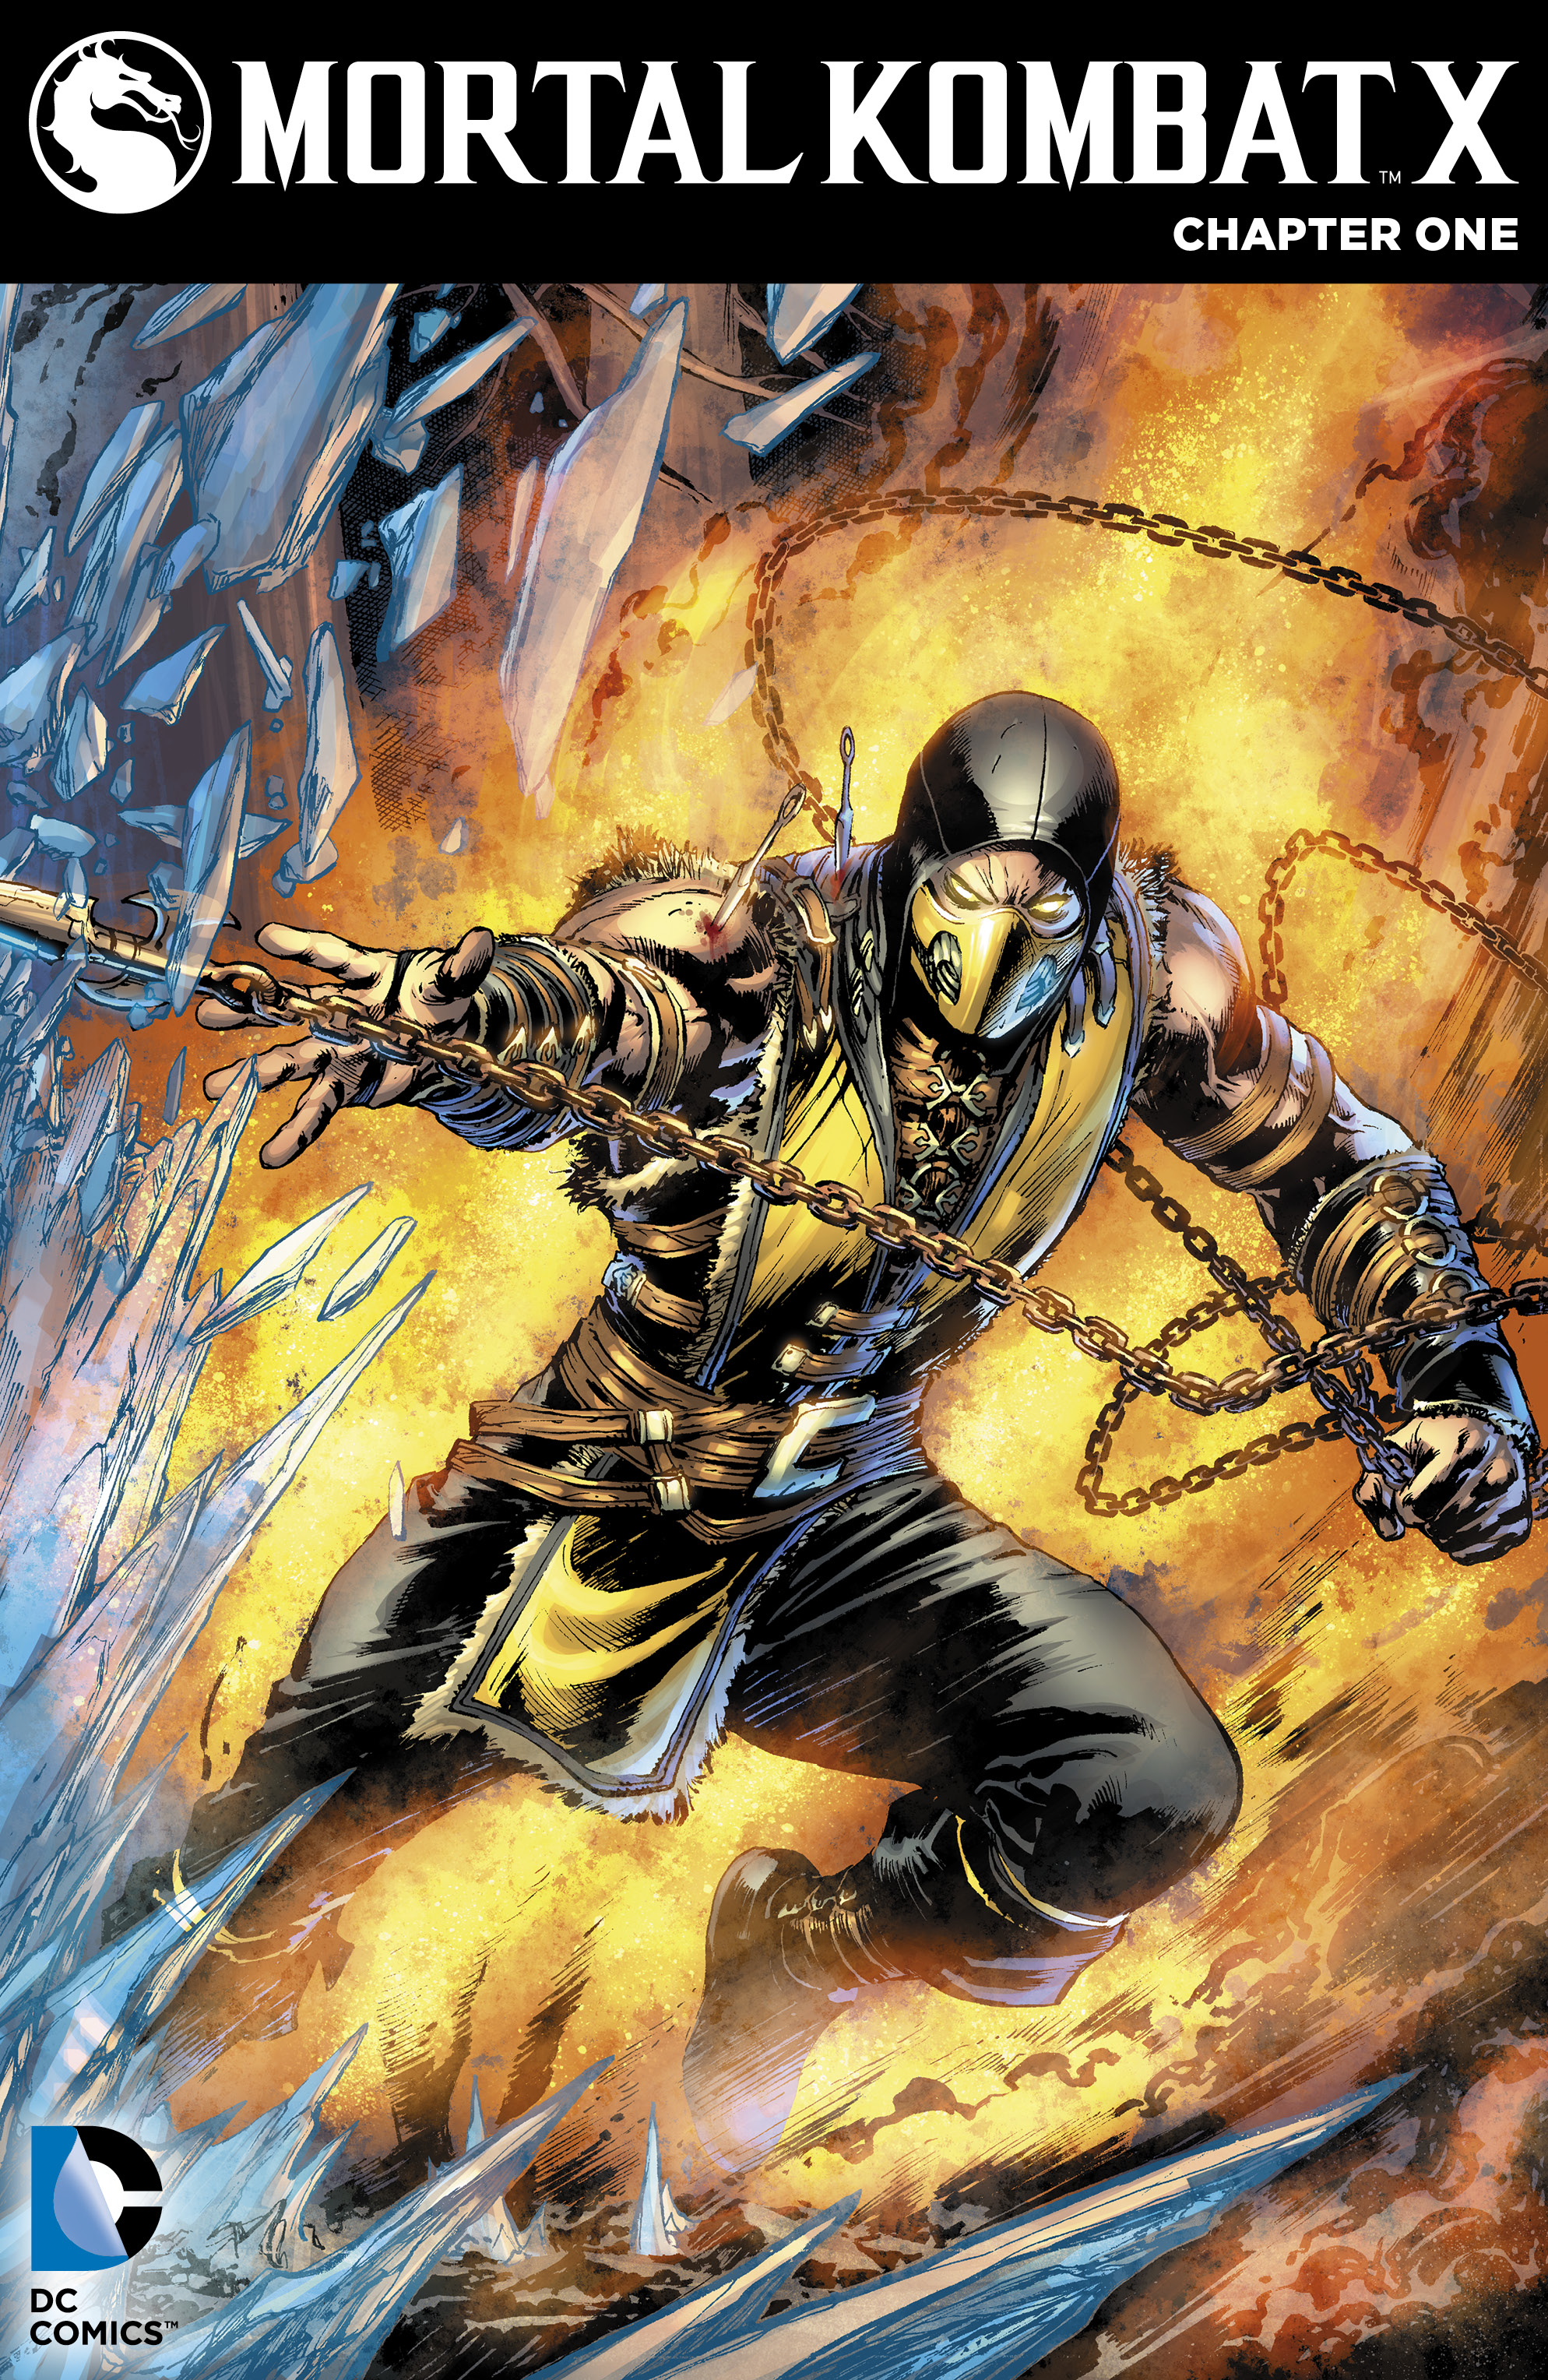 Mortal Kombat X #1 preview images